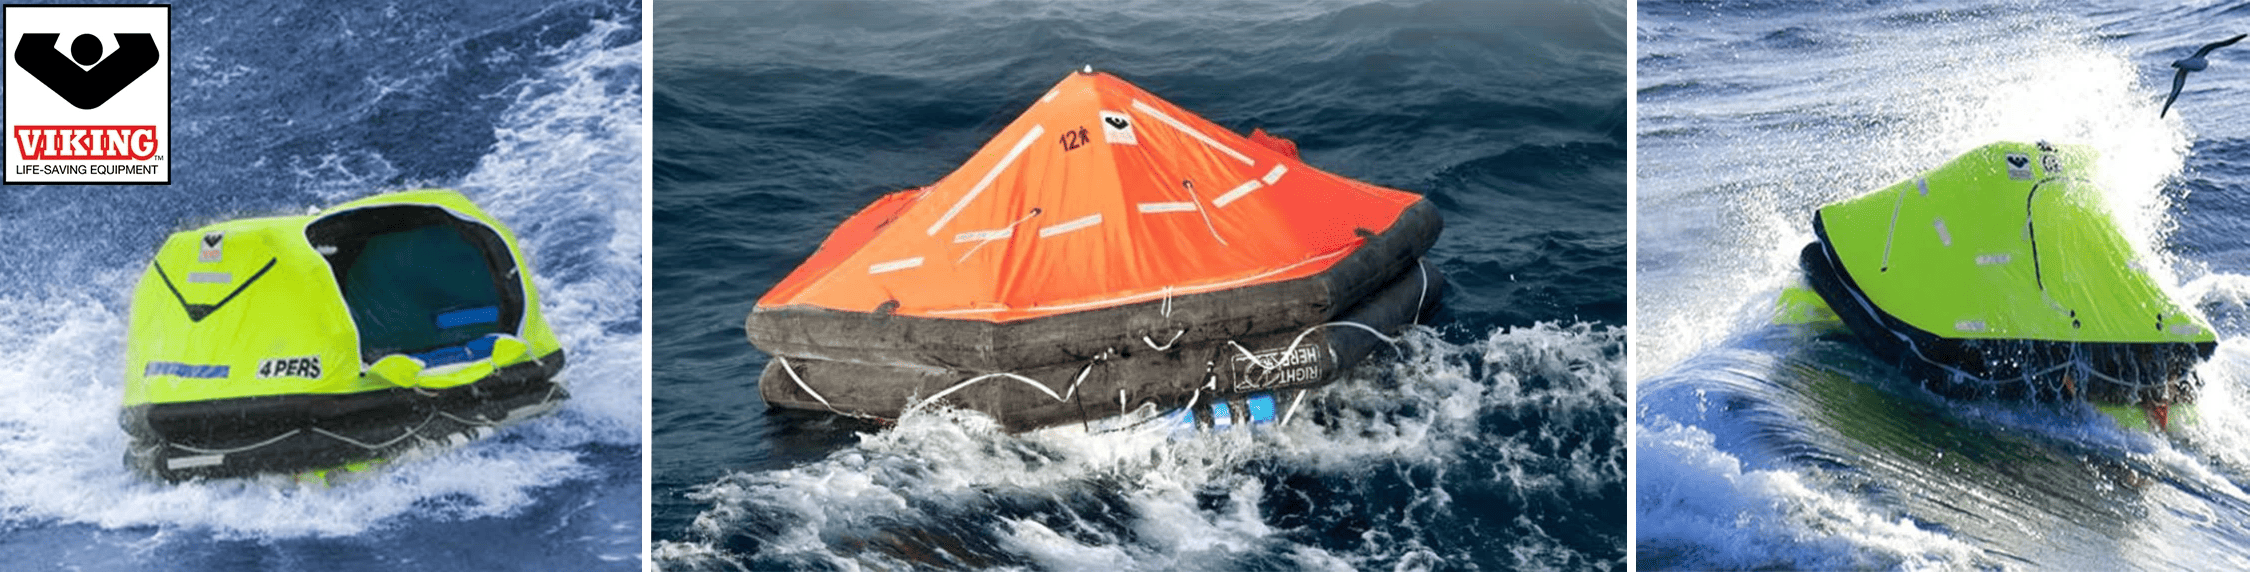 Viking Liferafts | Viking Rescue Coastal & Pro, 4 - 8 Person Liferafts